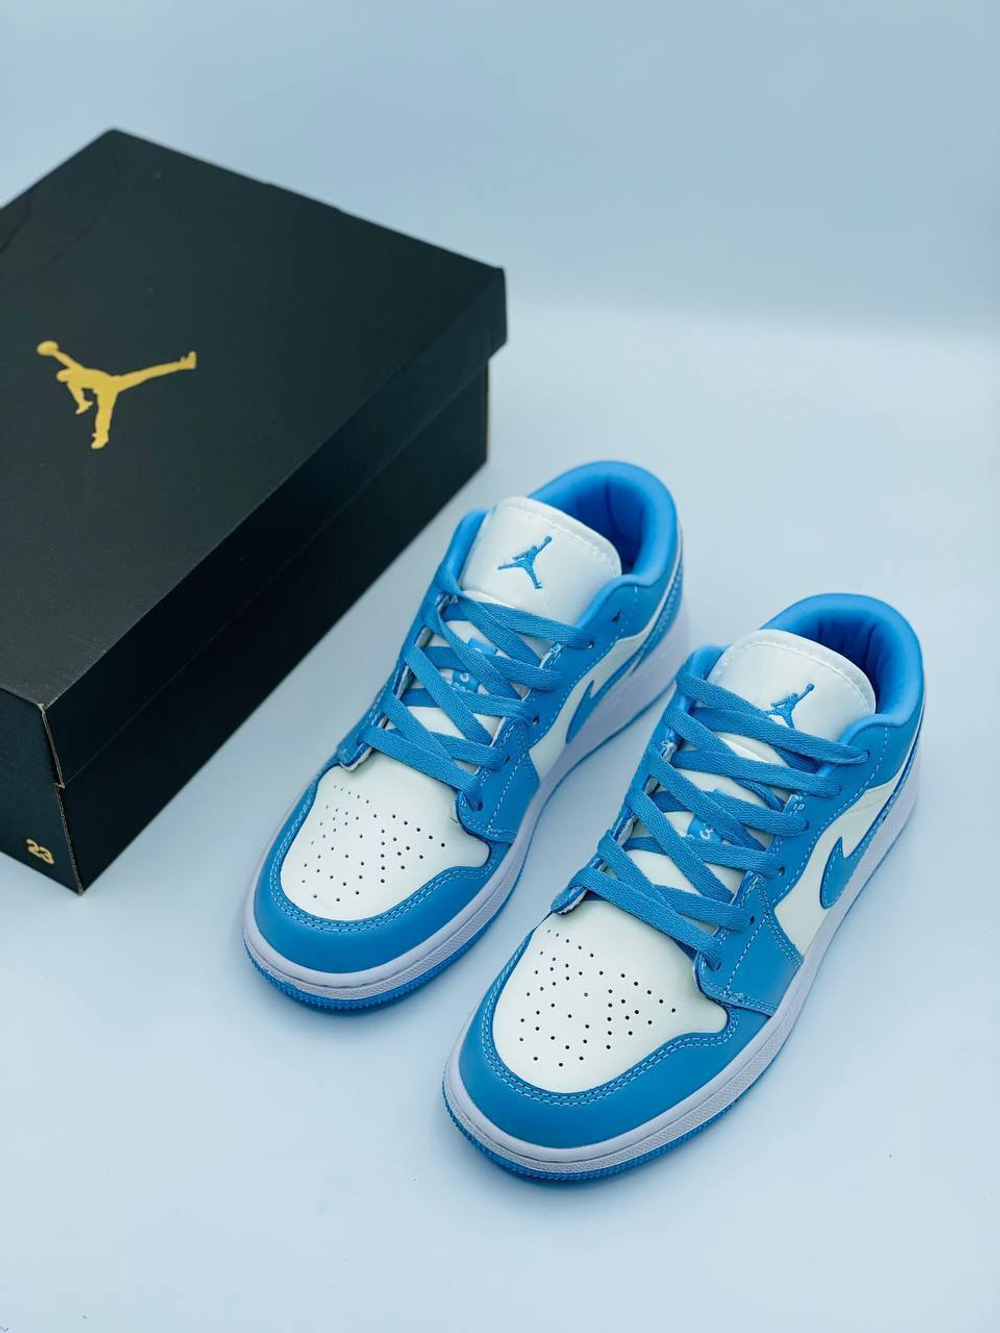 Кроссовки Nike Air Jordan 1 Low UNC Sneakers Blue